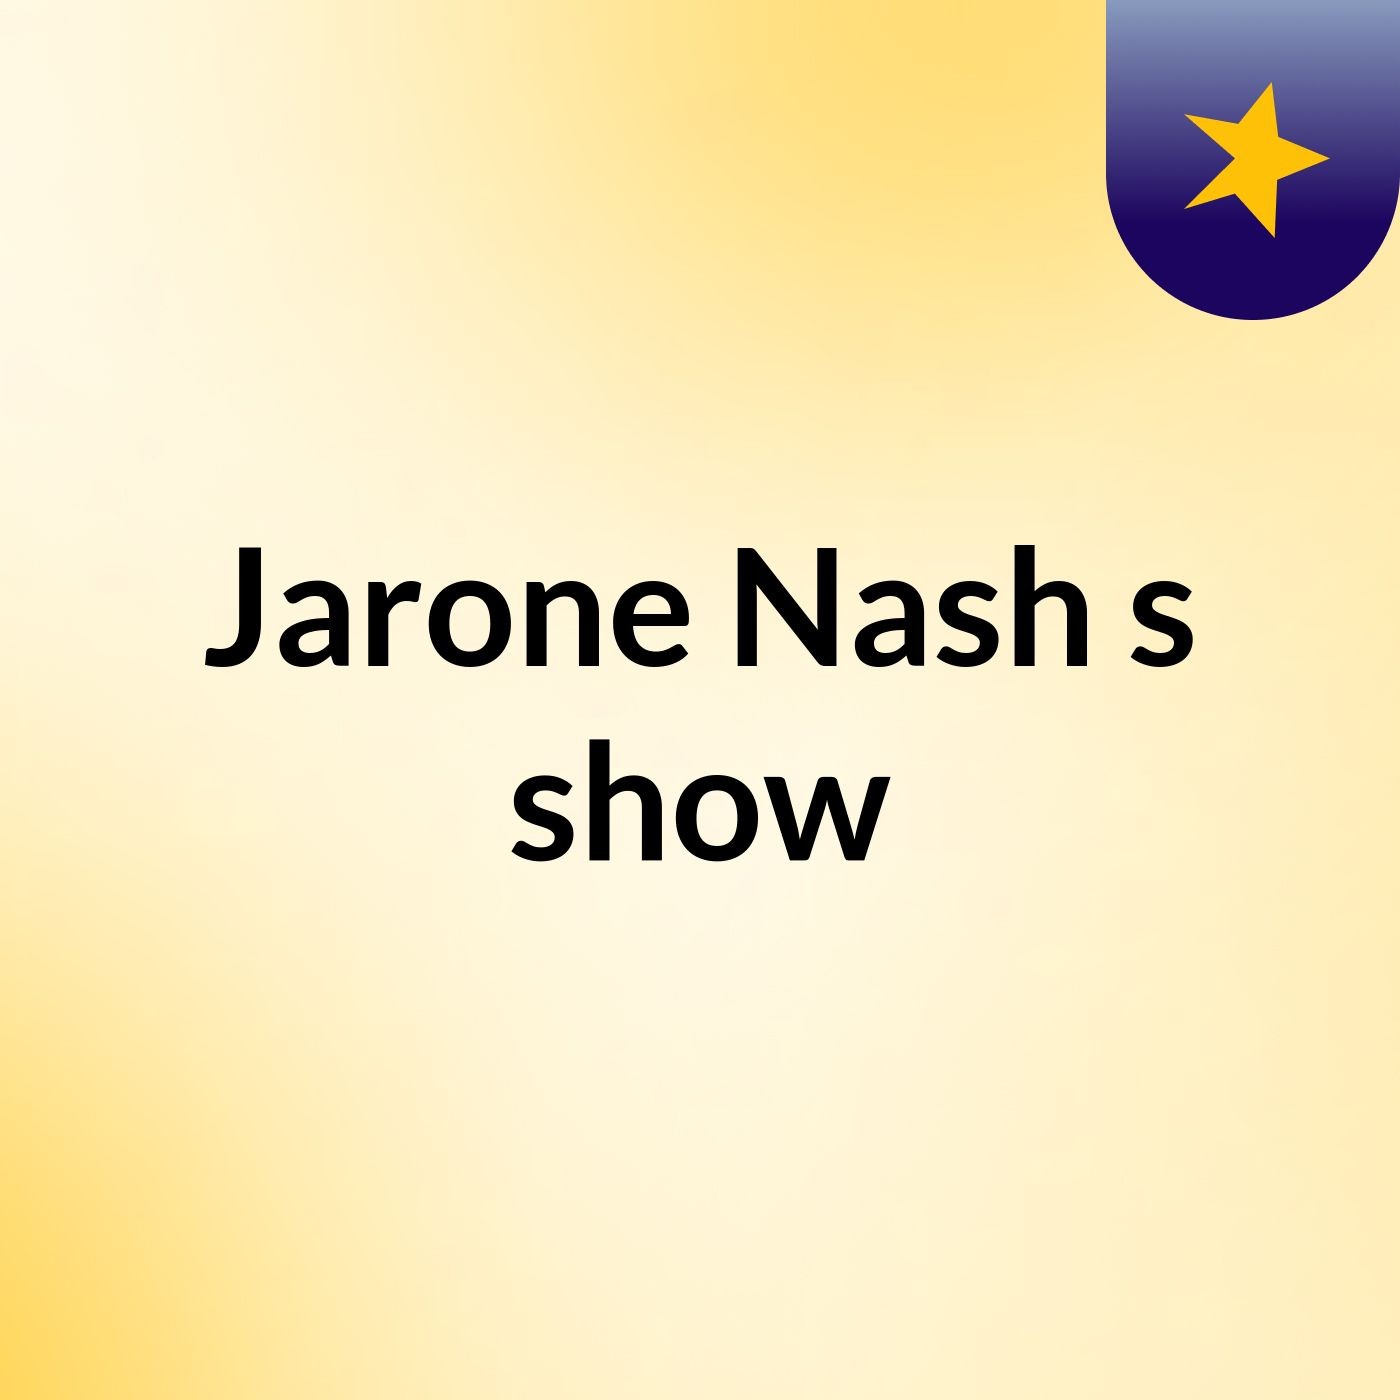 Episode 5 - Jarone Nash's show